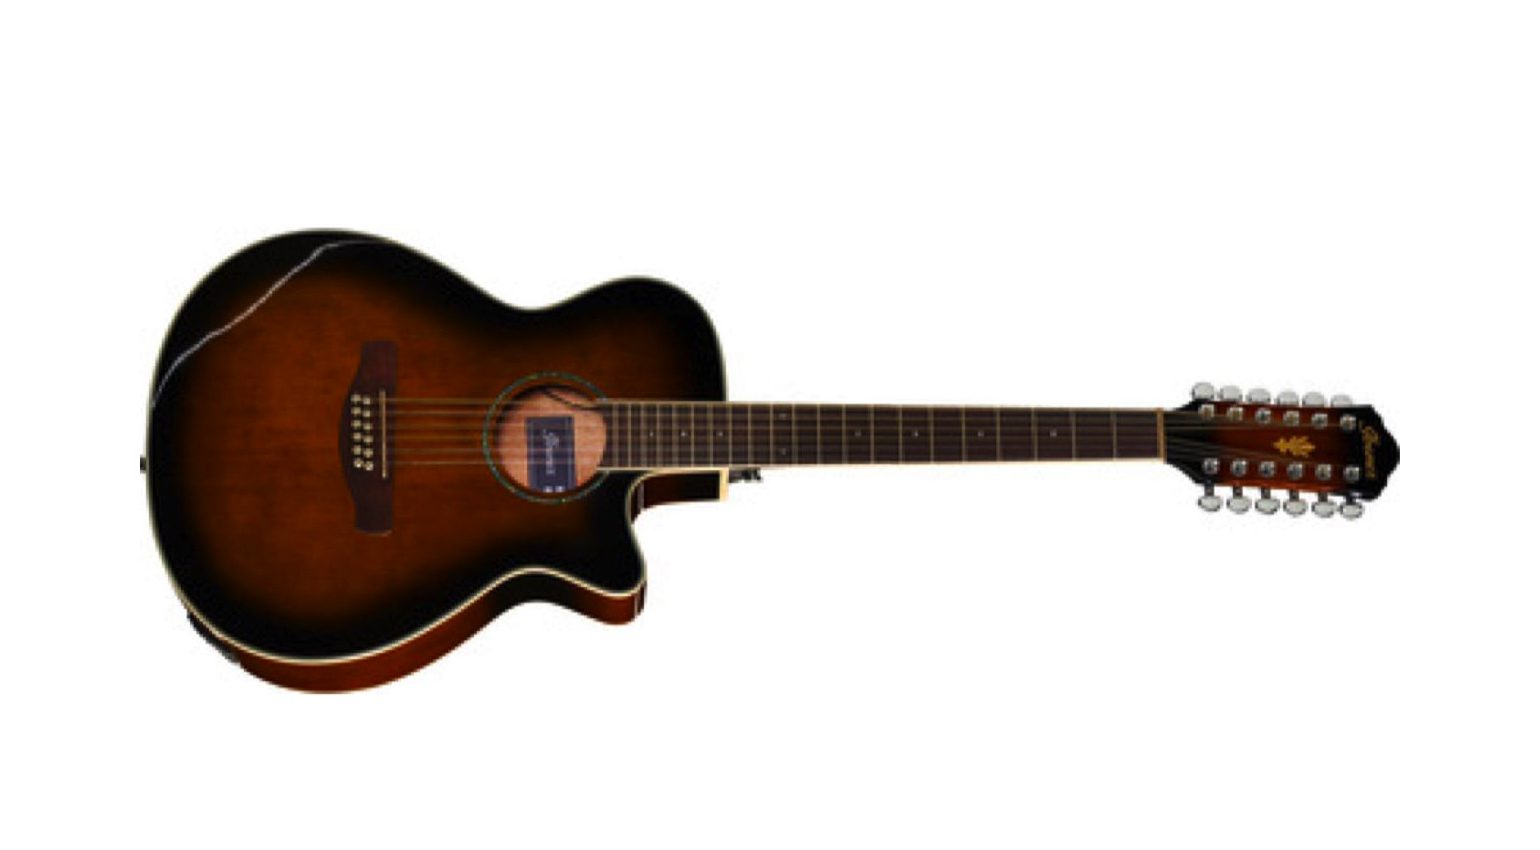 Ibanez AEG 1812 Acoustic Guitar